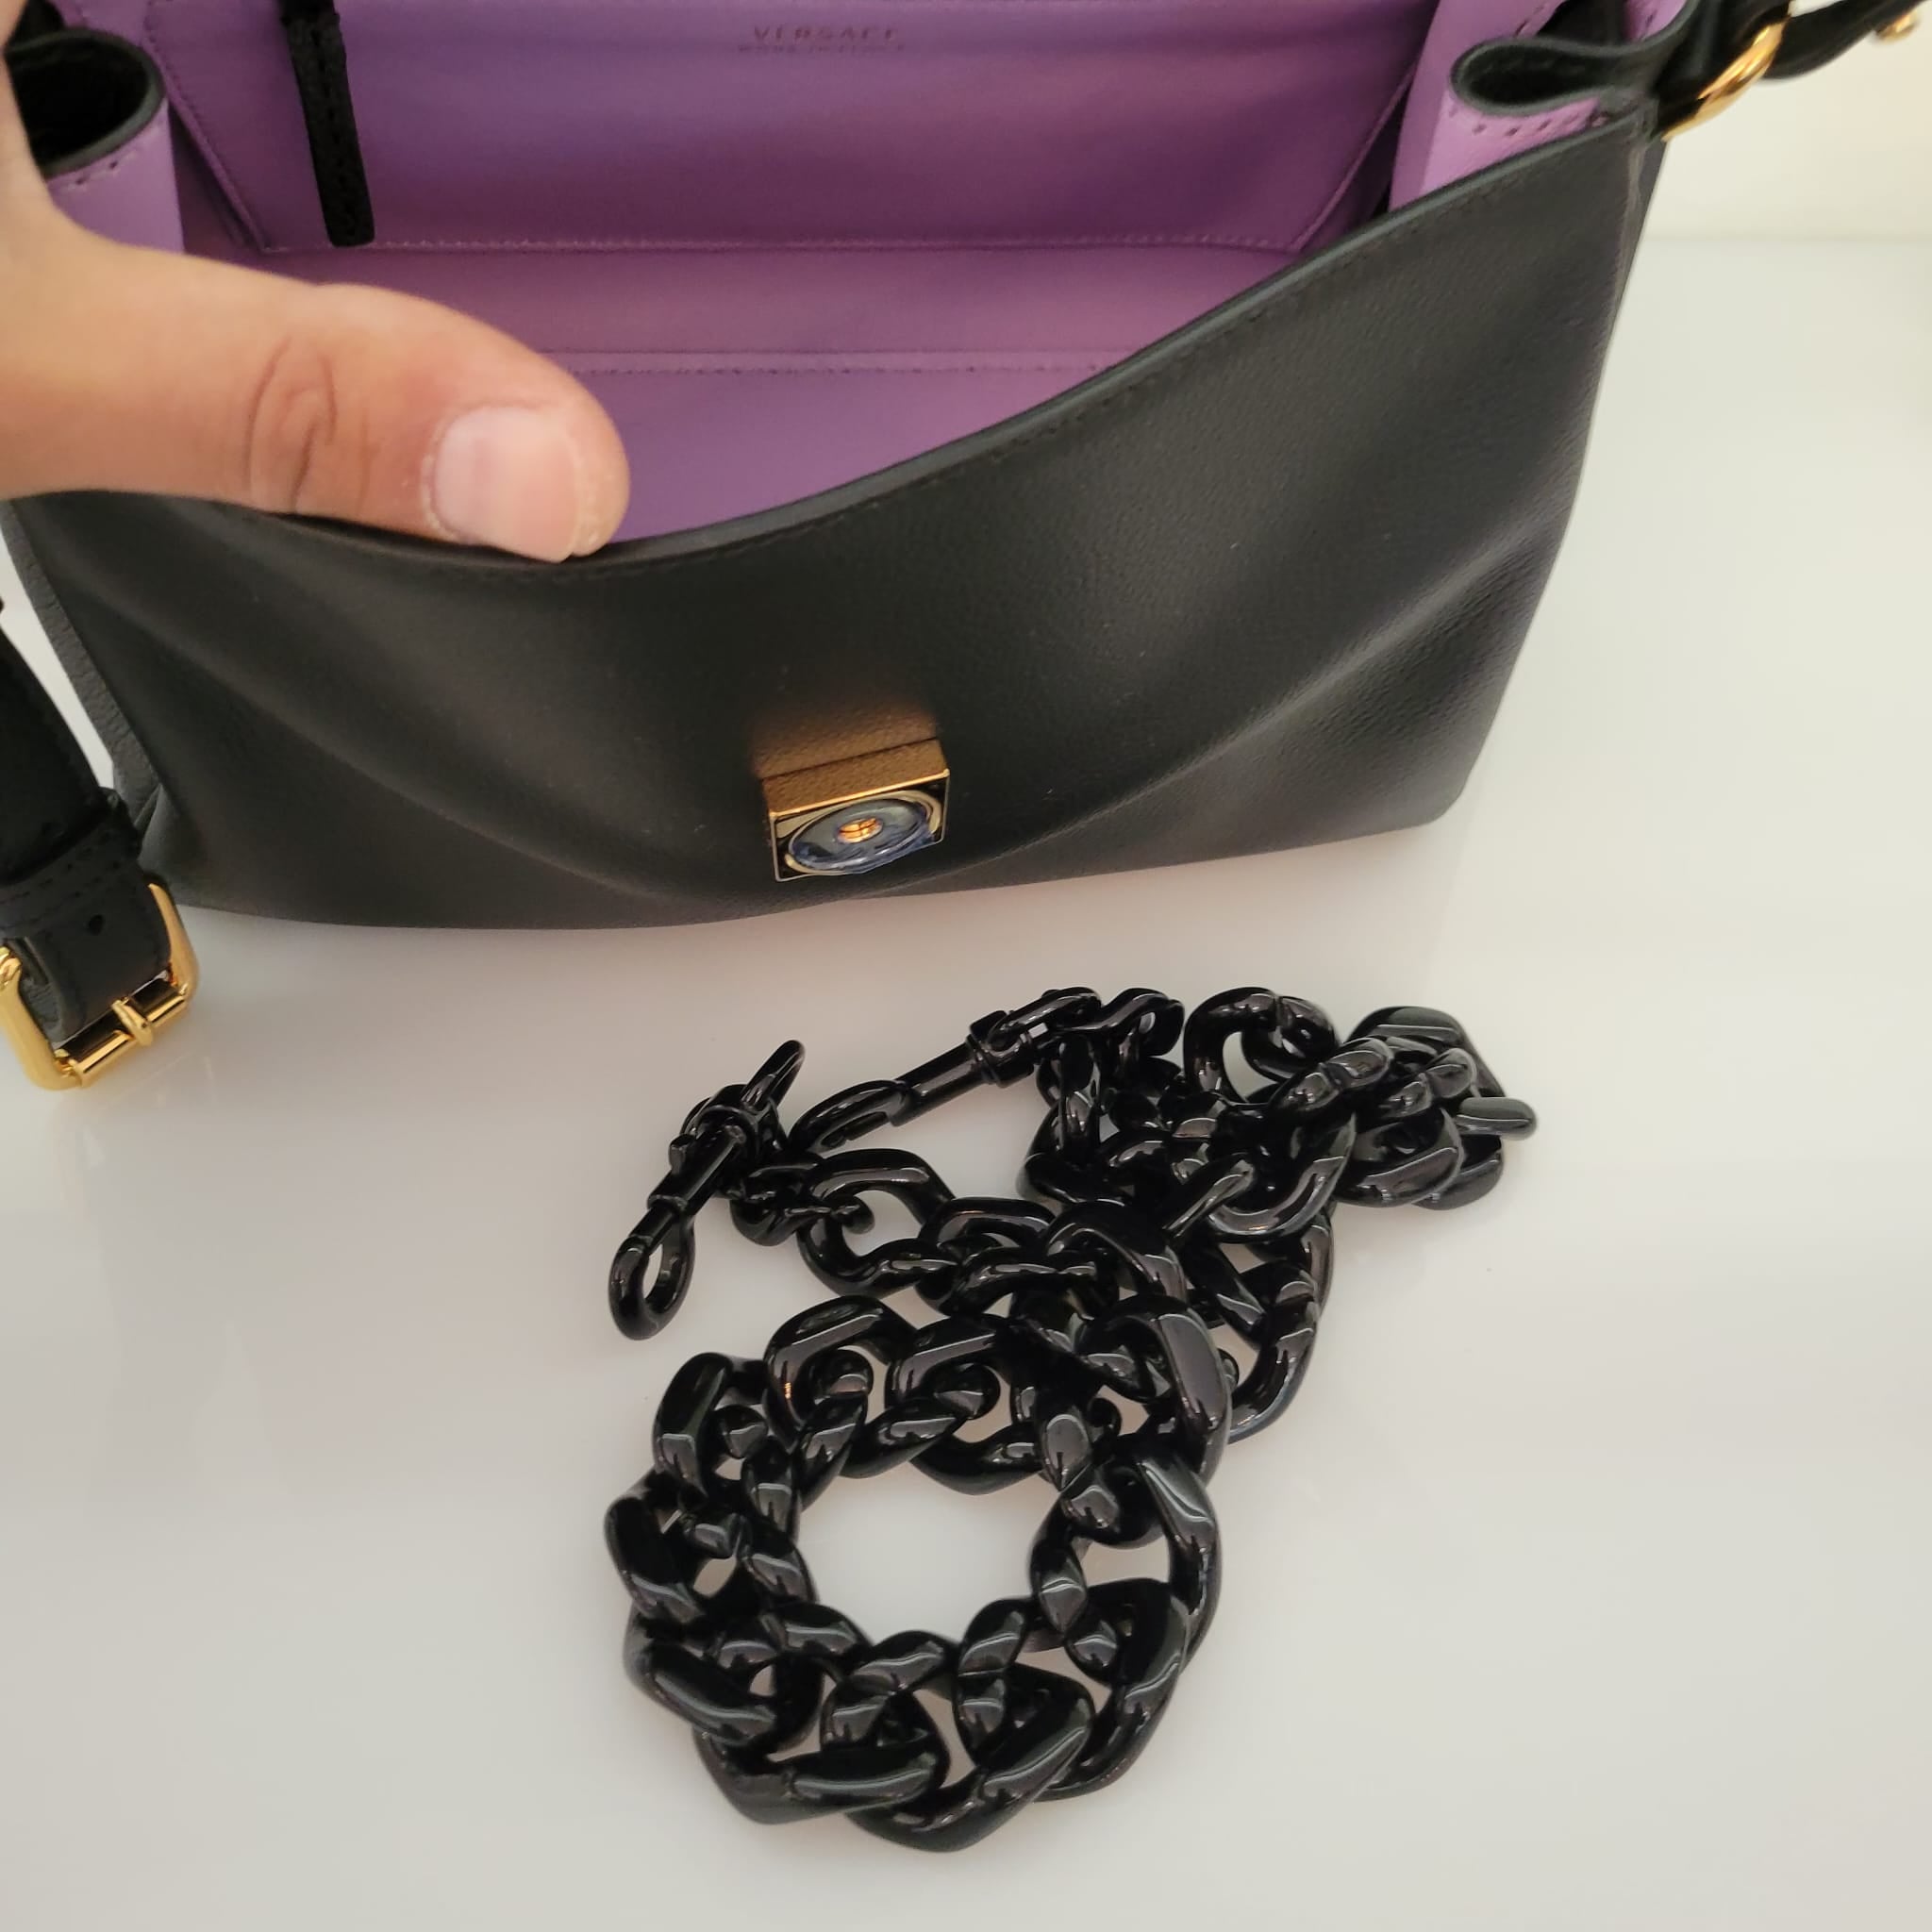 Versace large La Medusa tote bag - ShopStyle